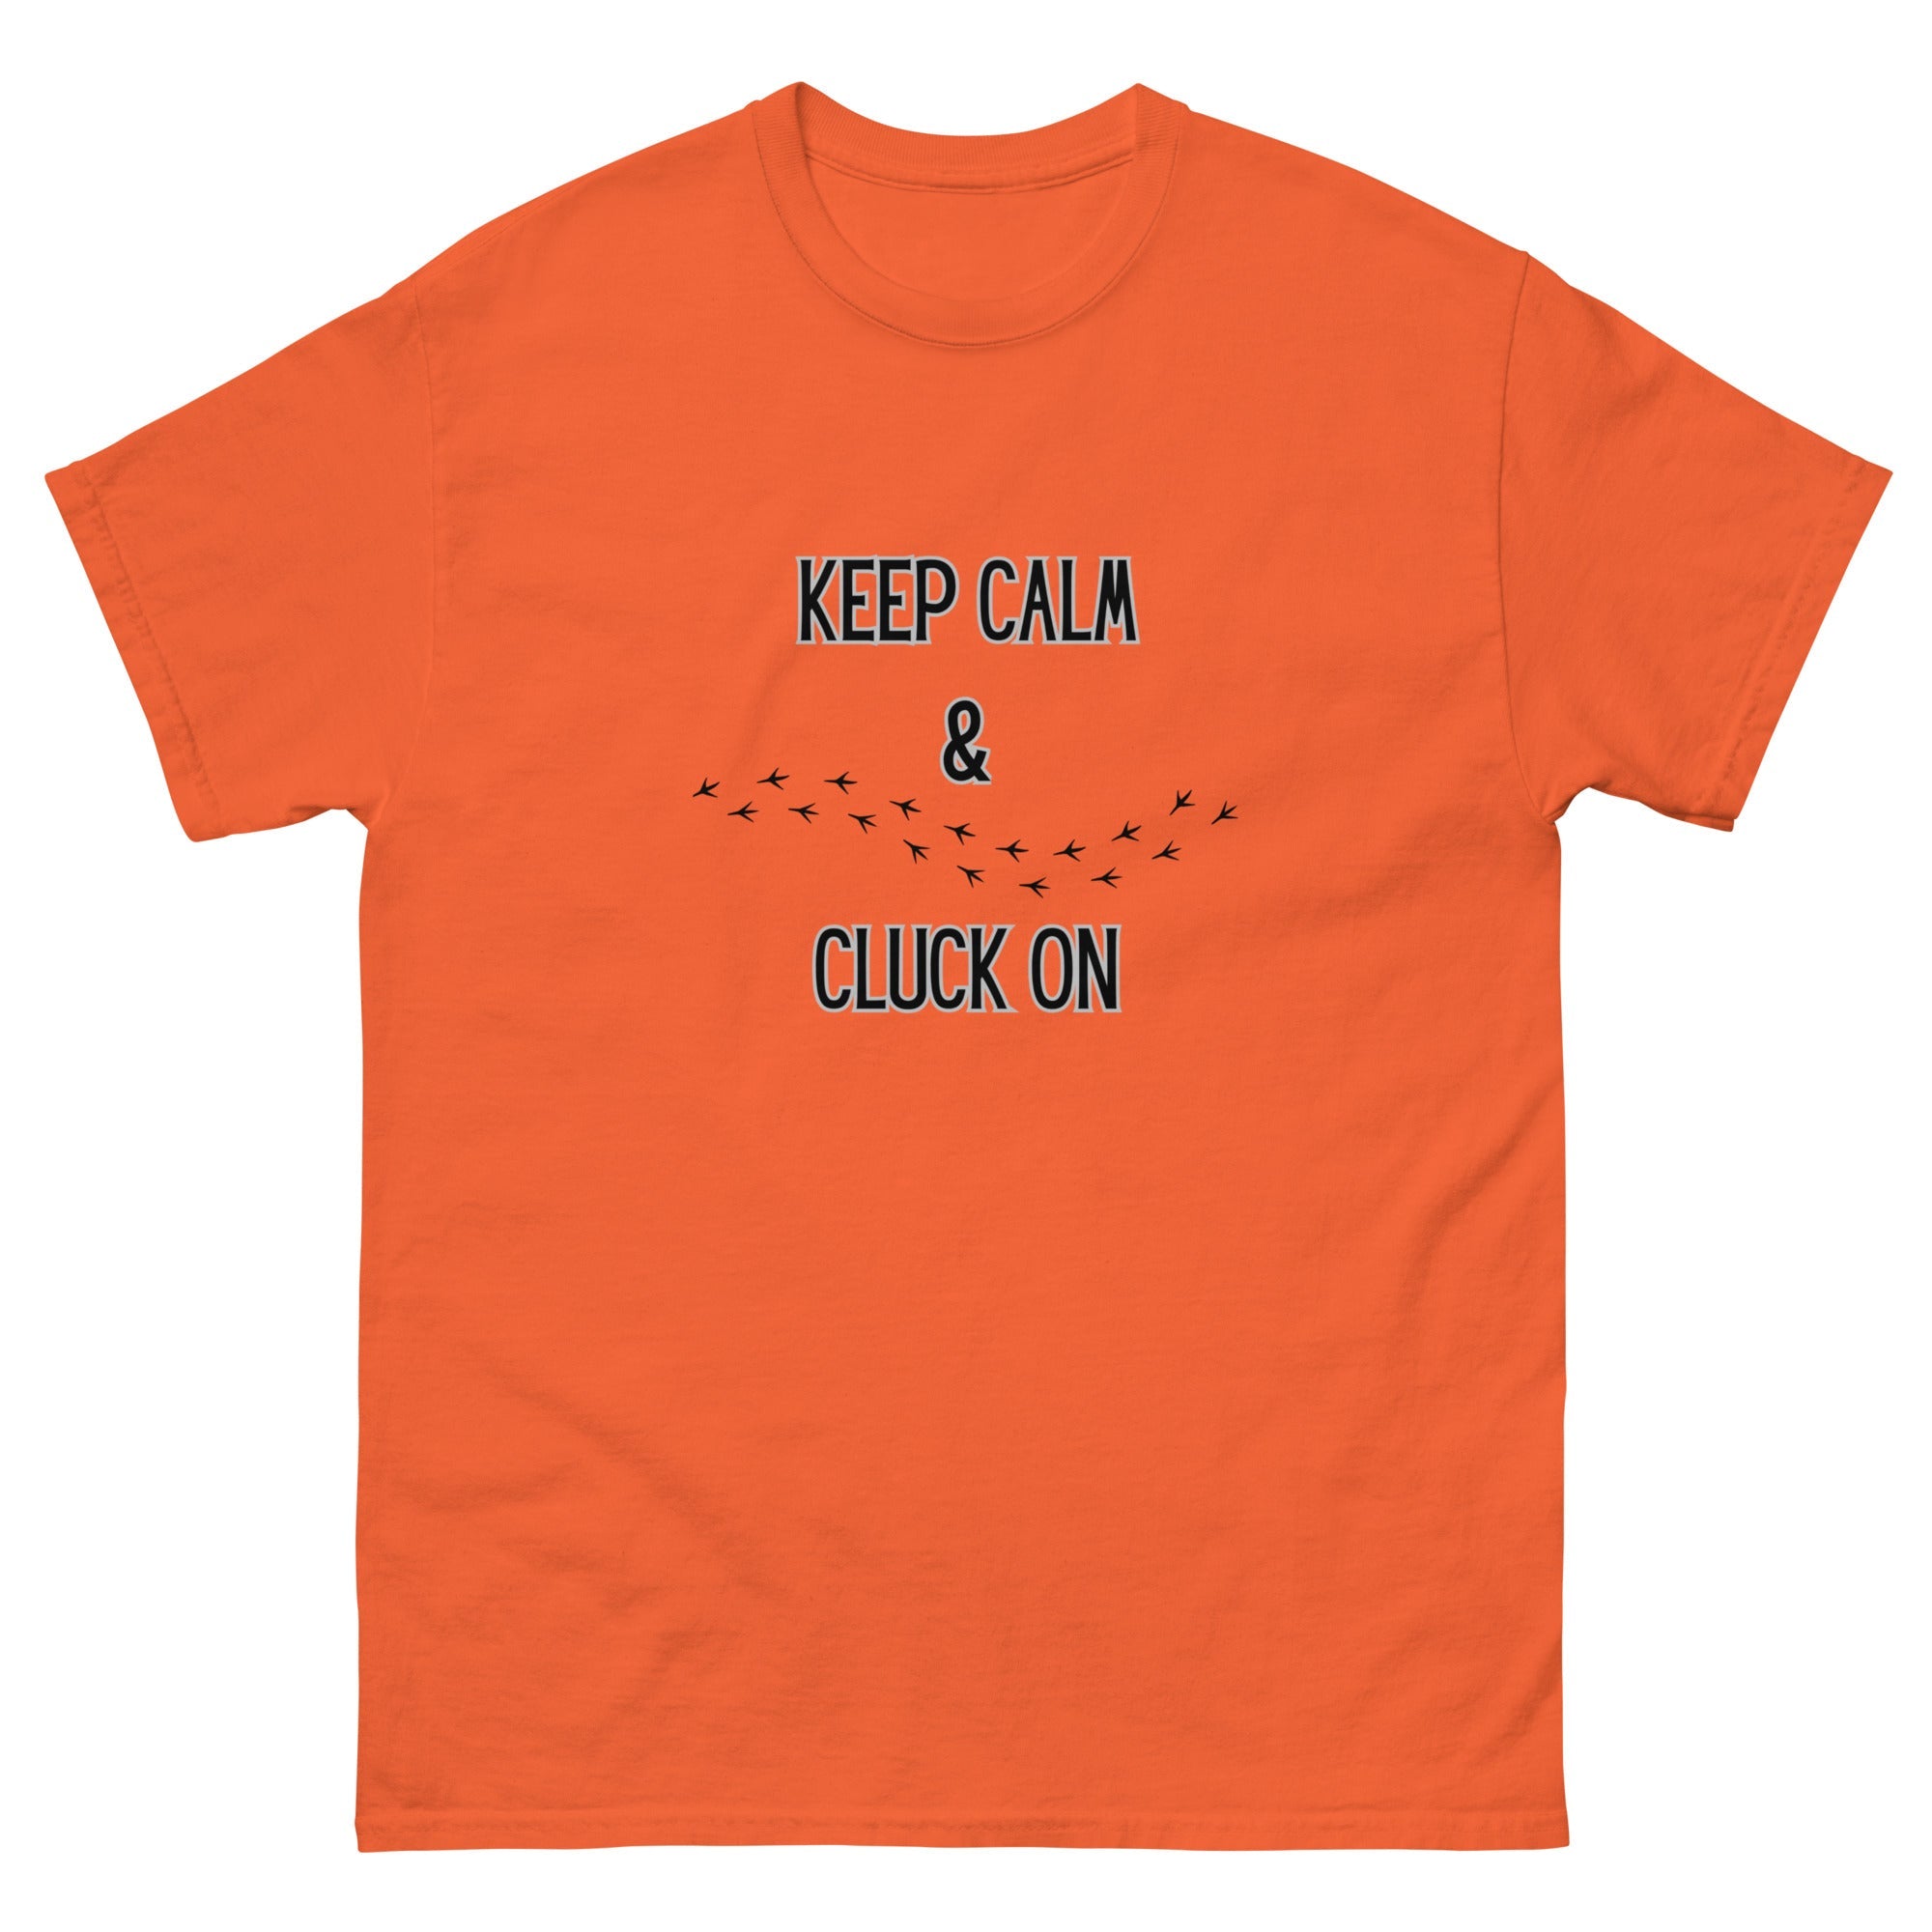 Keep Calm & Cluck On Unisex Classic Tee - Cluck It All Farms